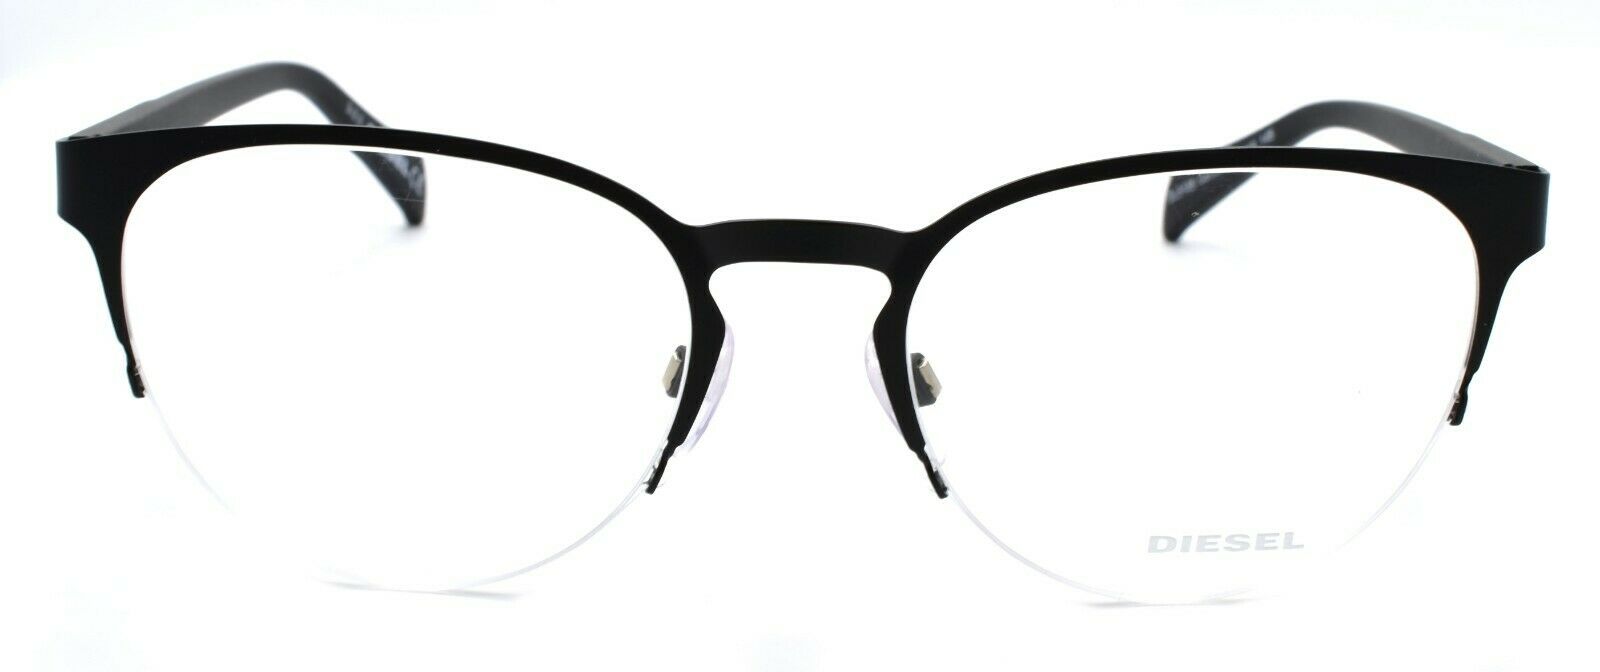 2-Diesel DL5158 002 Unisex Eyeglasses Frames Half Rim 52-19-145 Matte Black-664689708024-IKSpecs